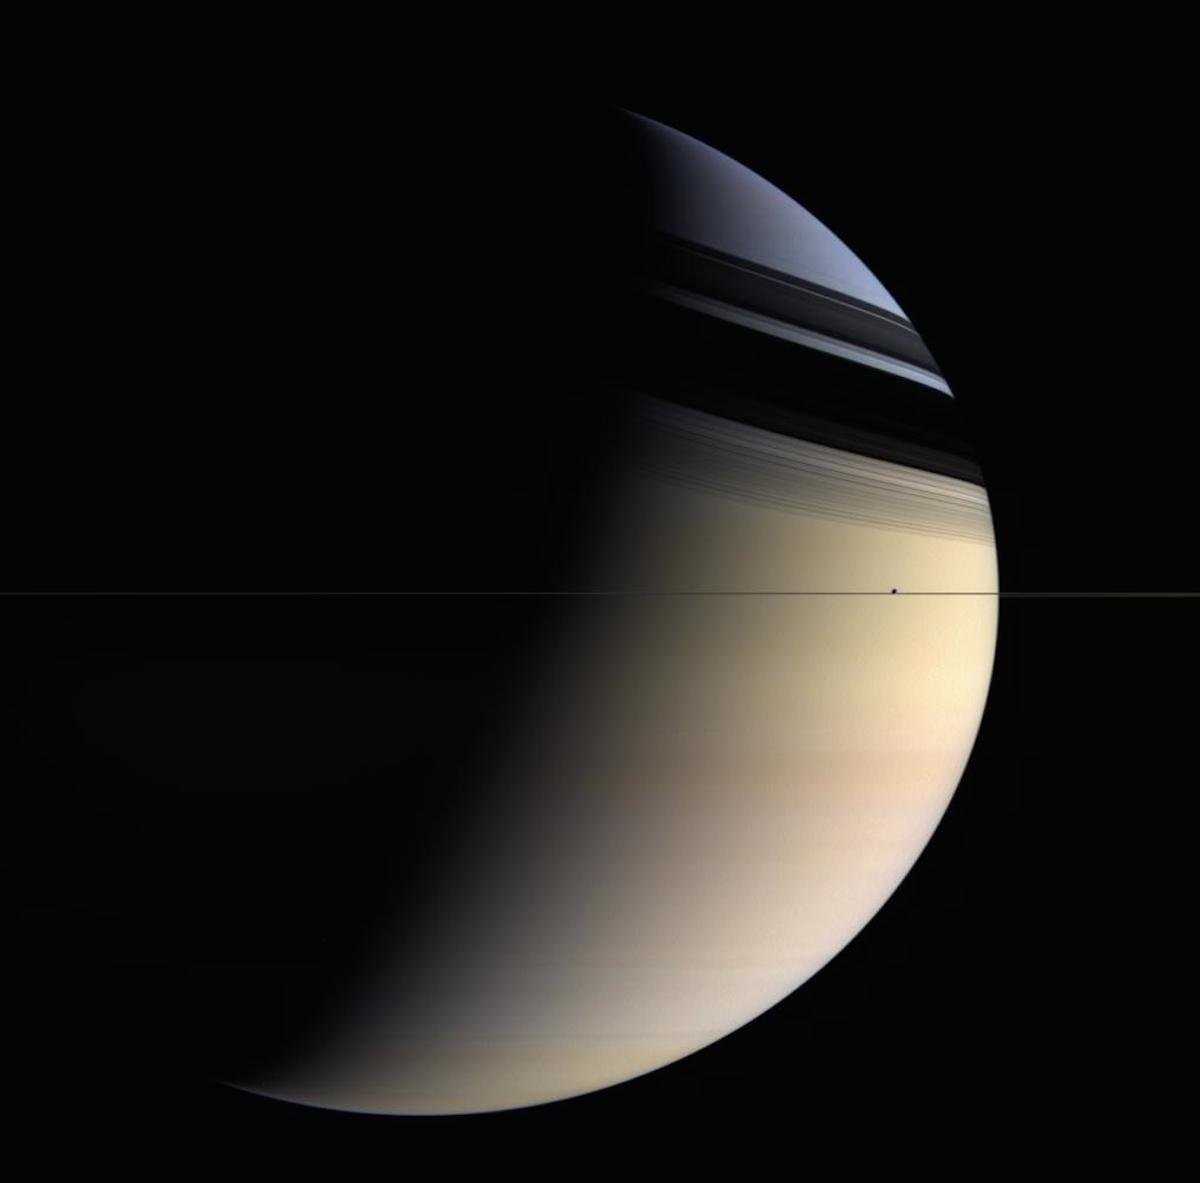 Amazing photos of majestic Saturn 15